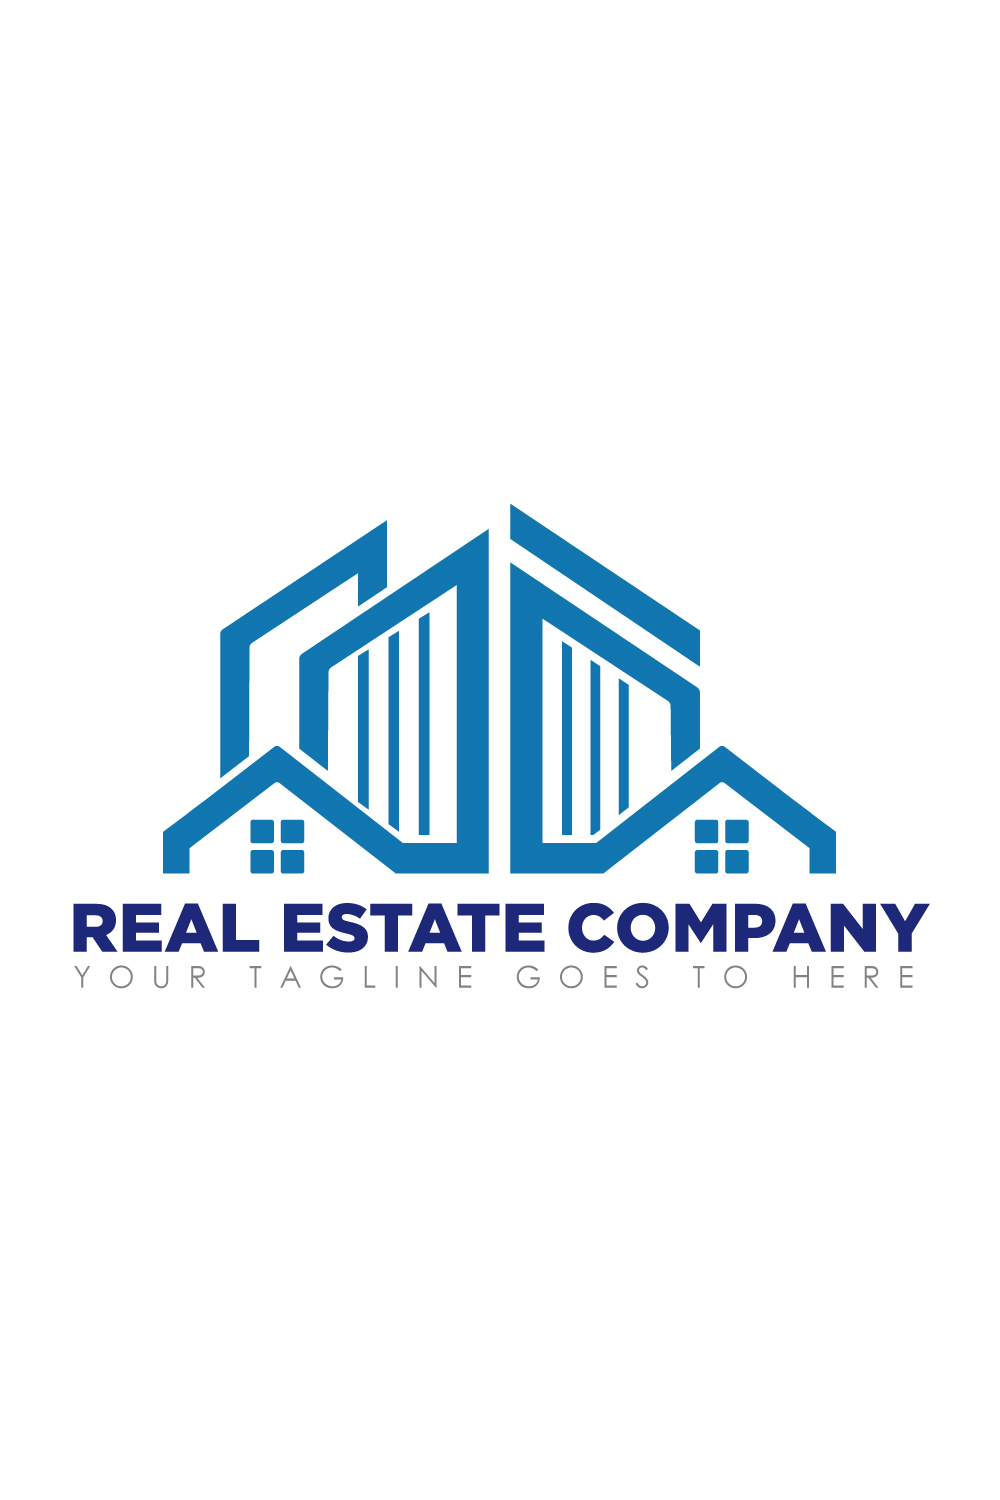 Real Estate company logo design pinterest preview image.